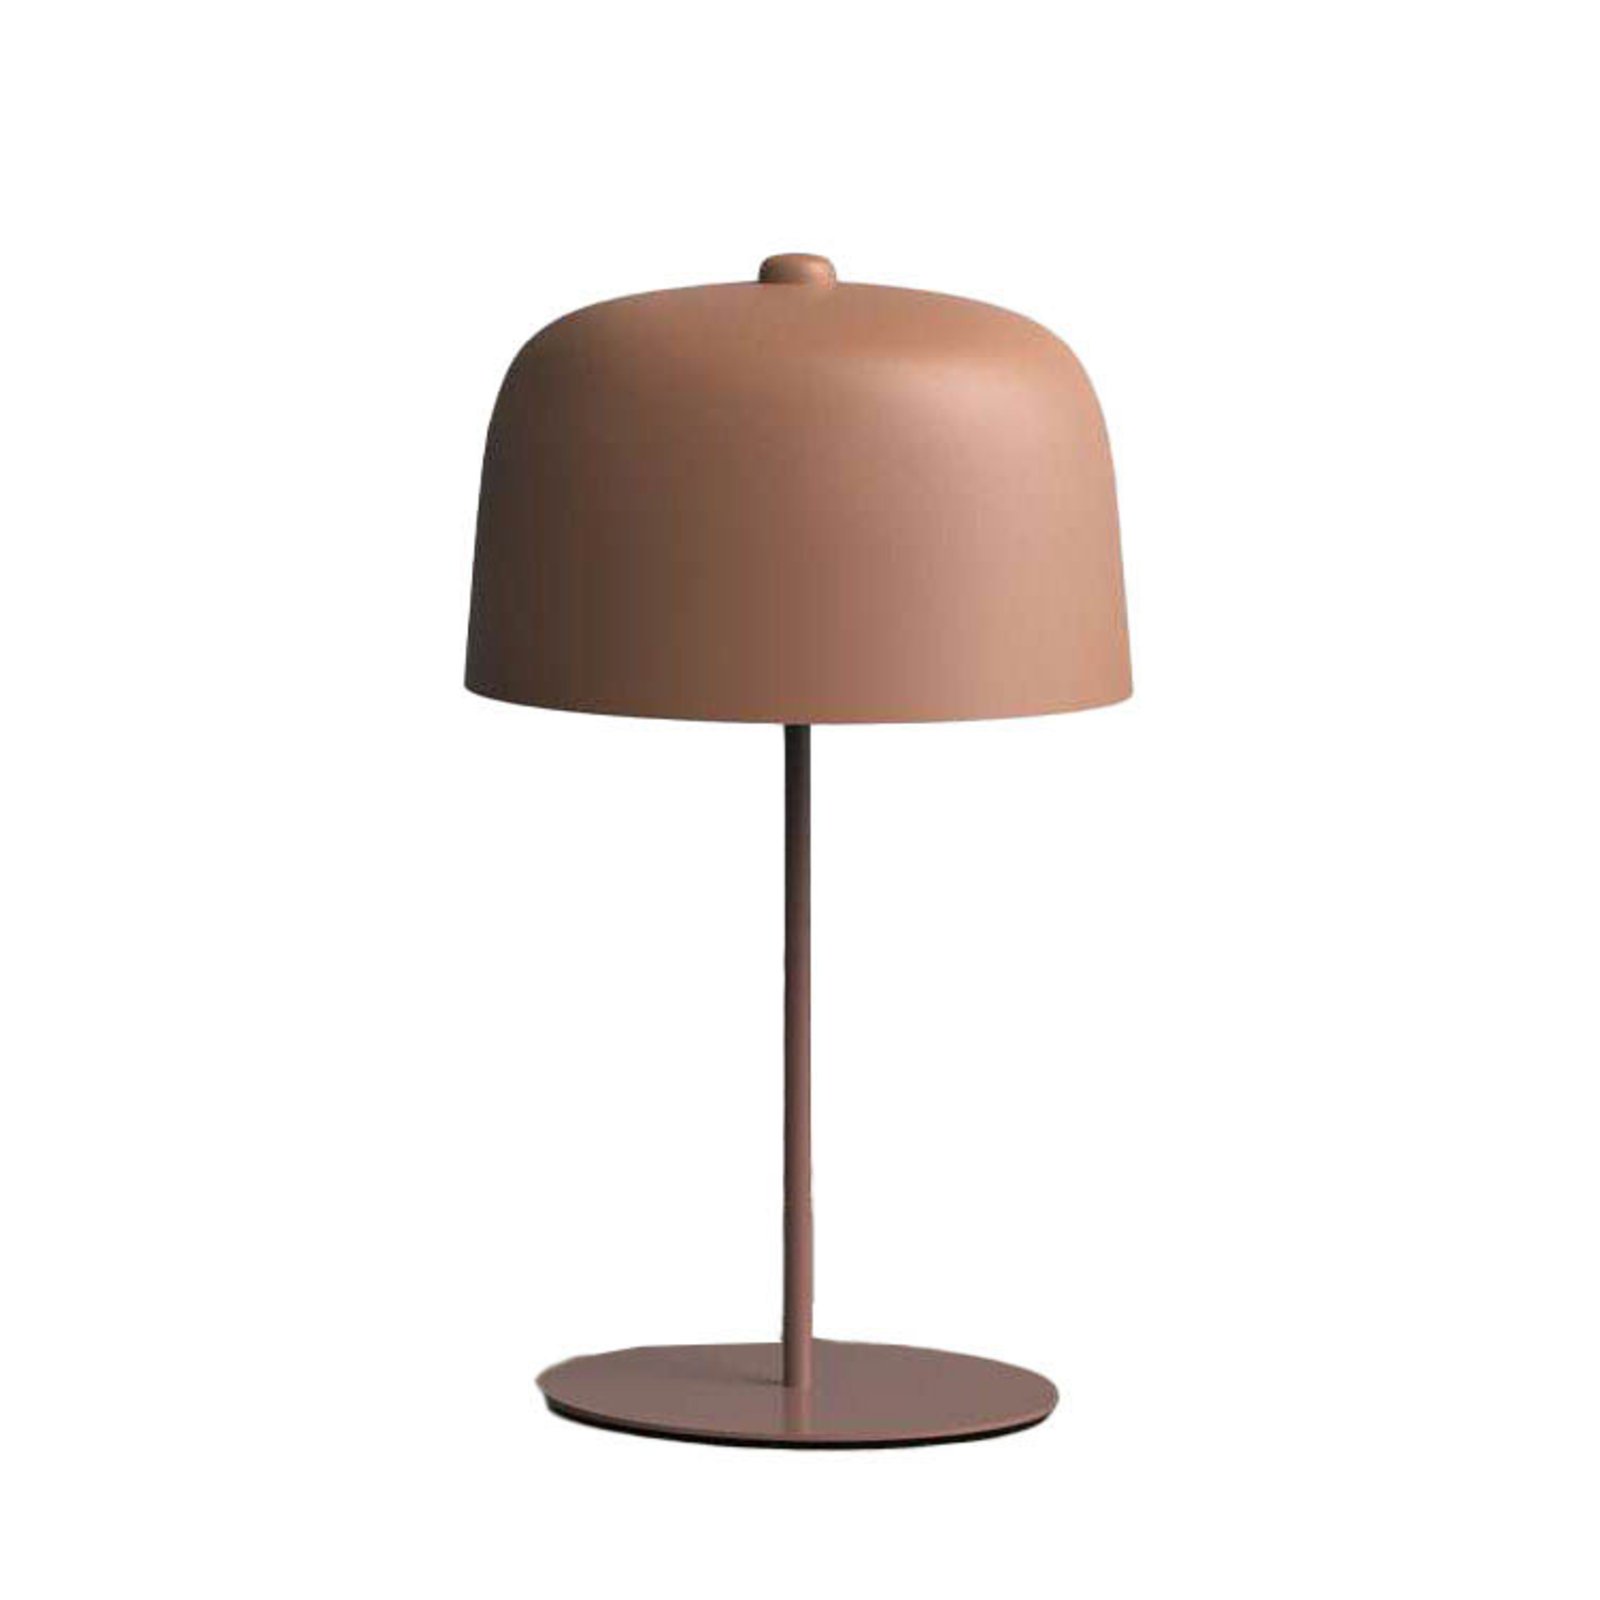 Luceplan Zile tafellamp baksteenrood, hoogte 66 cm